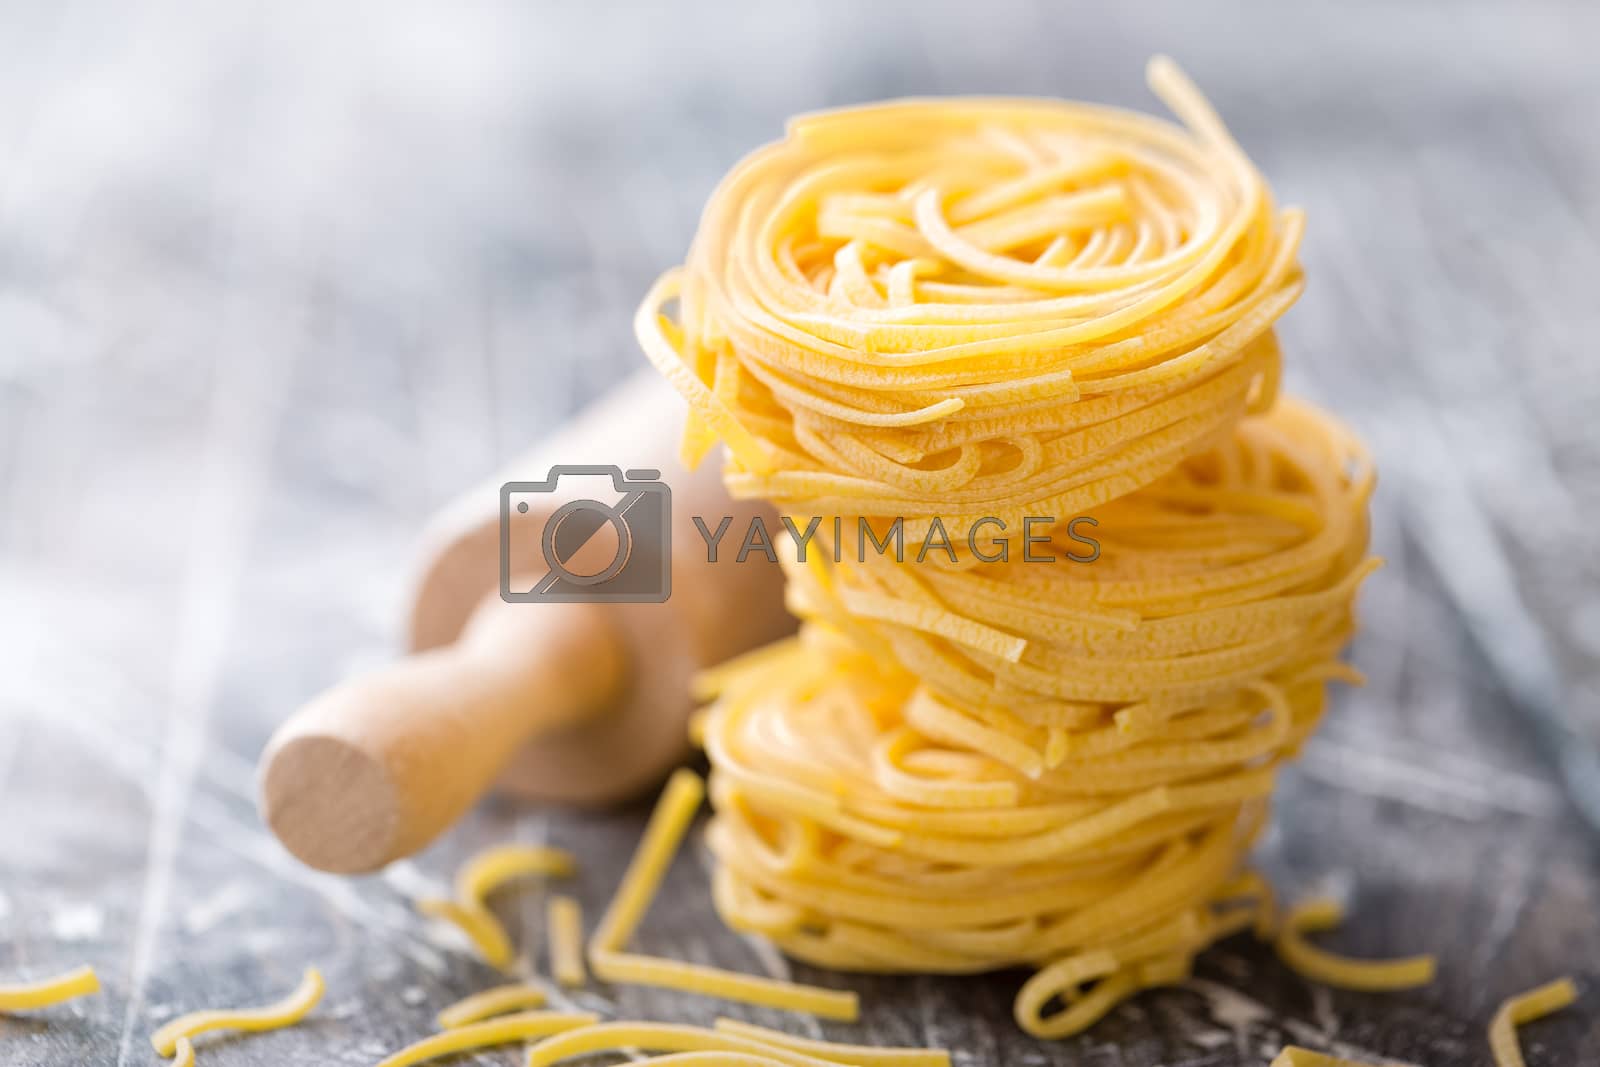 Royalty free image of pasta by yelenayemchuk